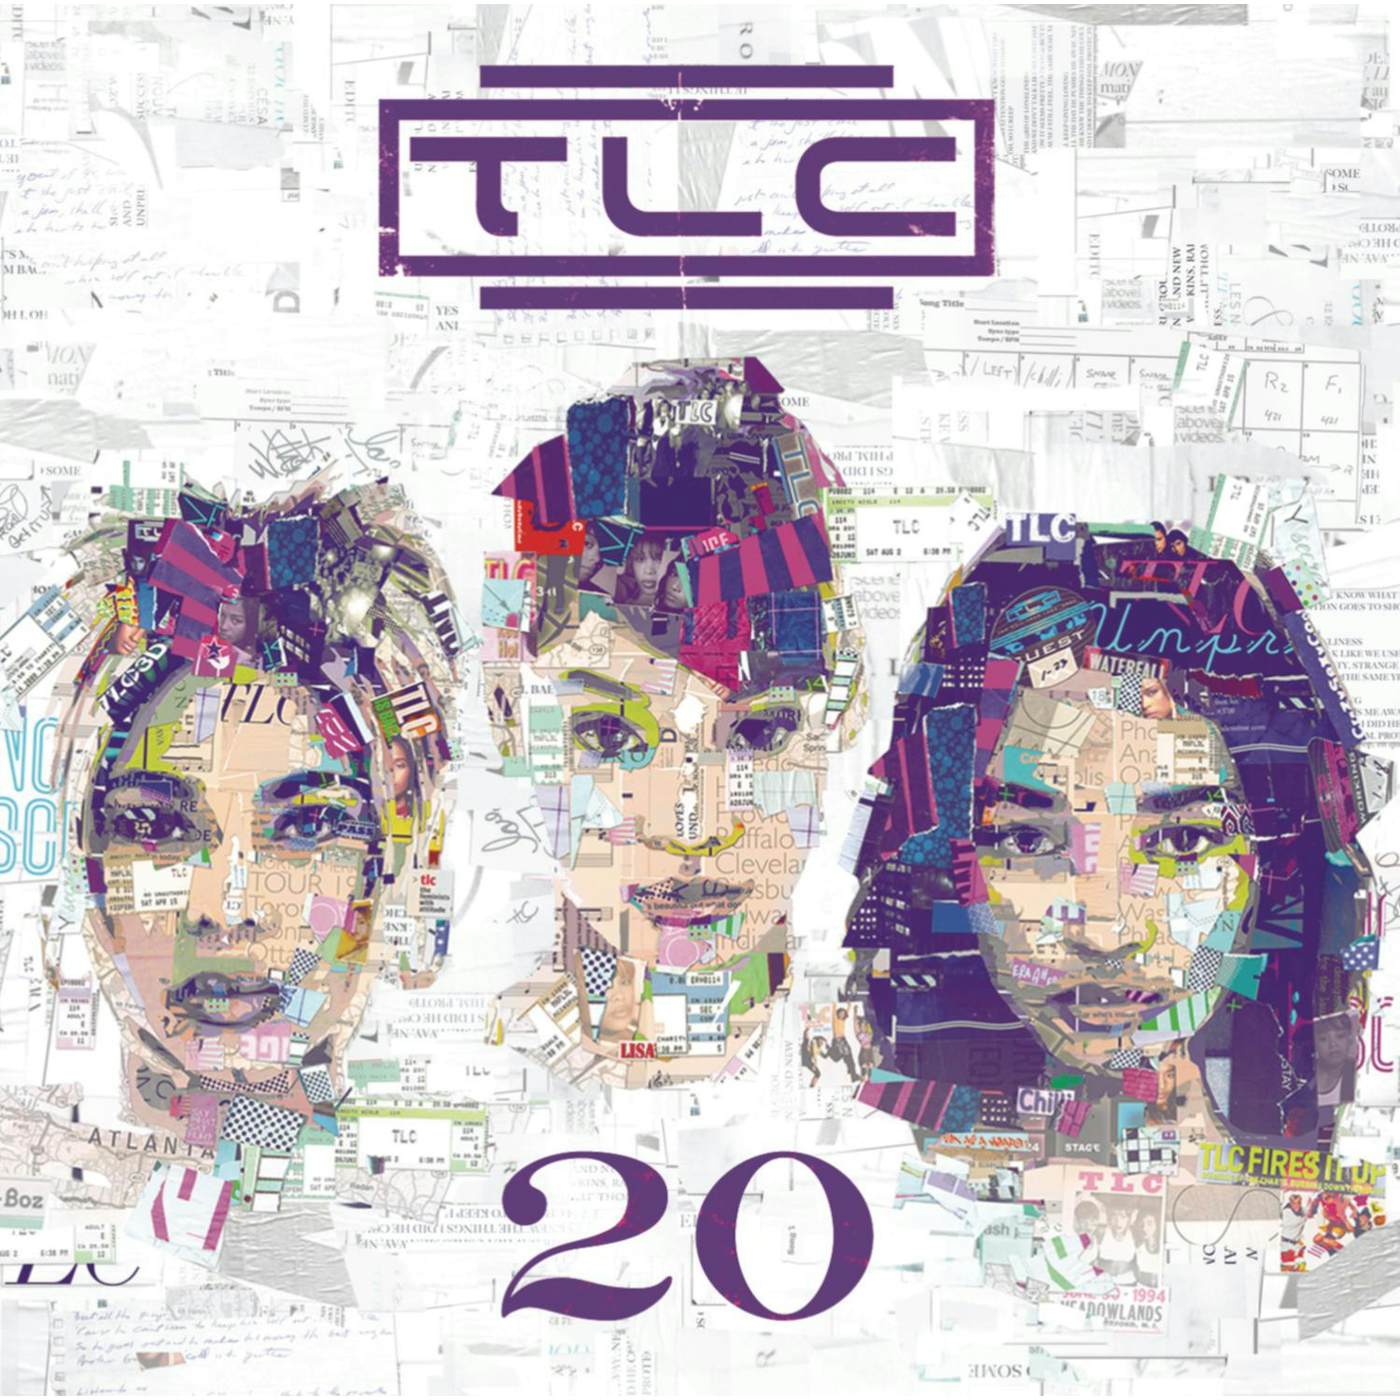 TLC 20 CD